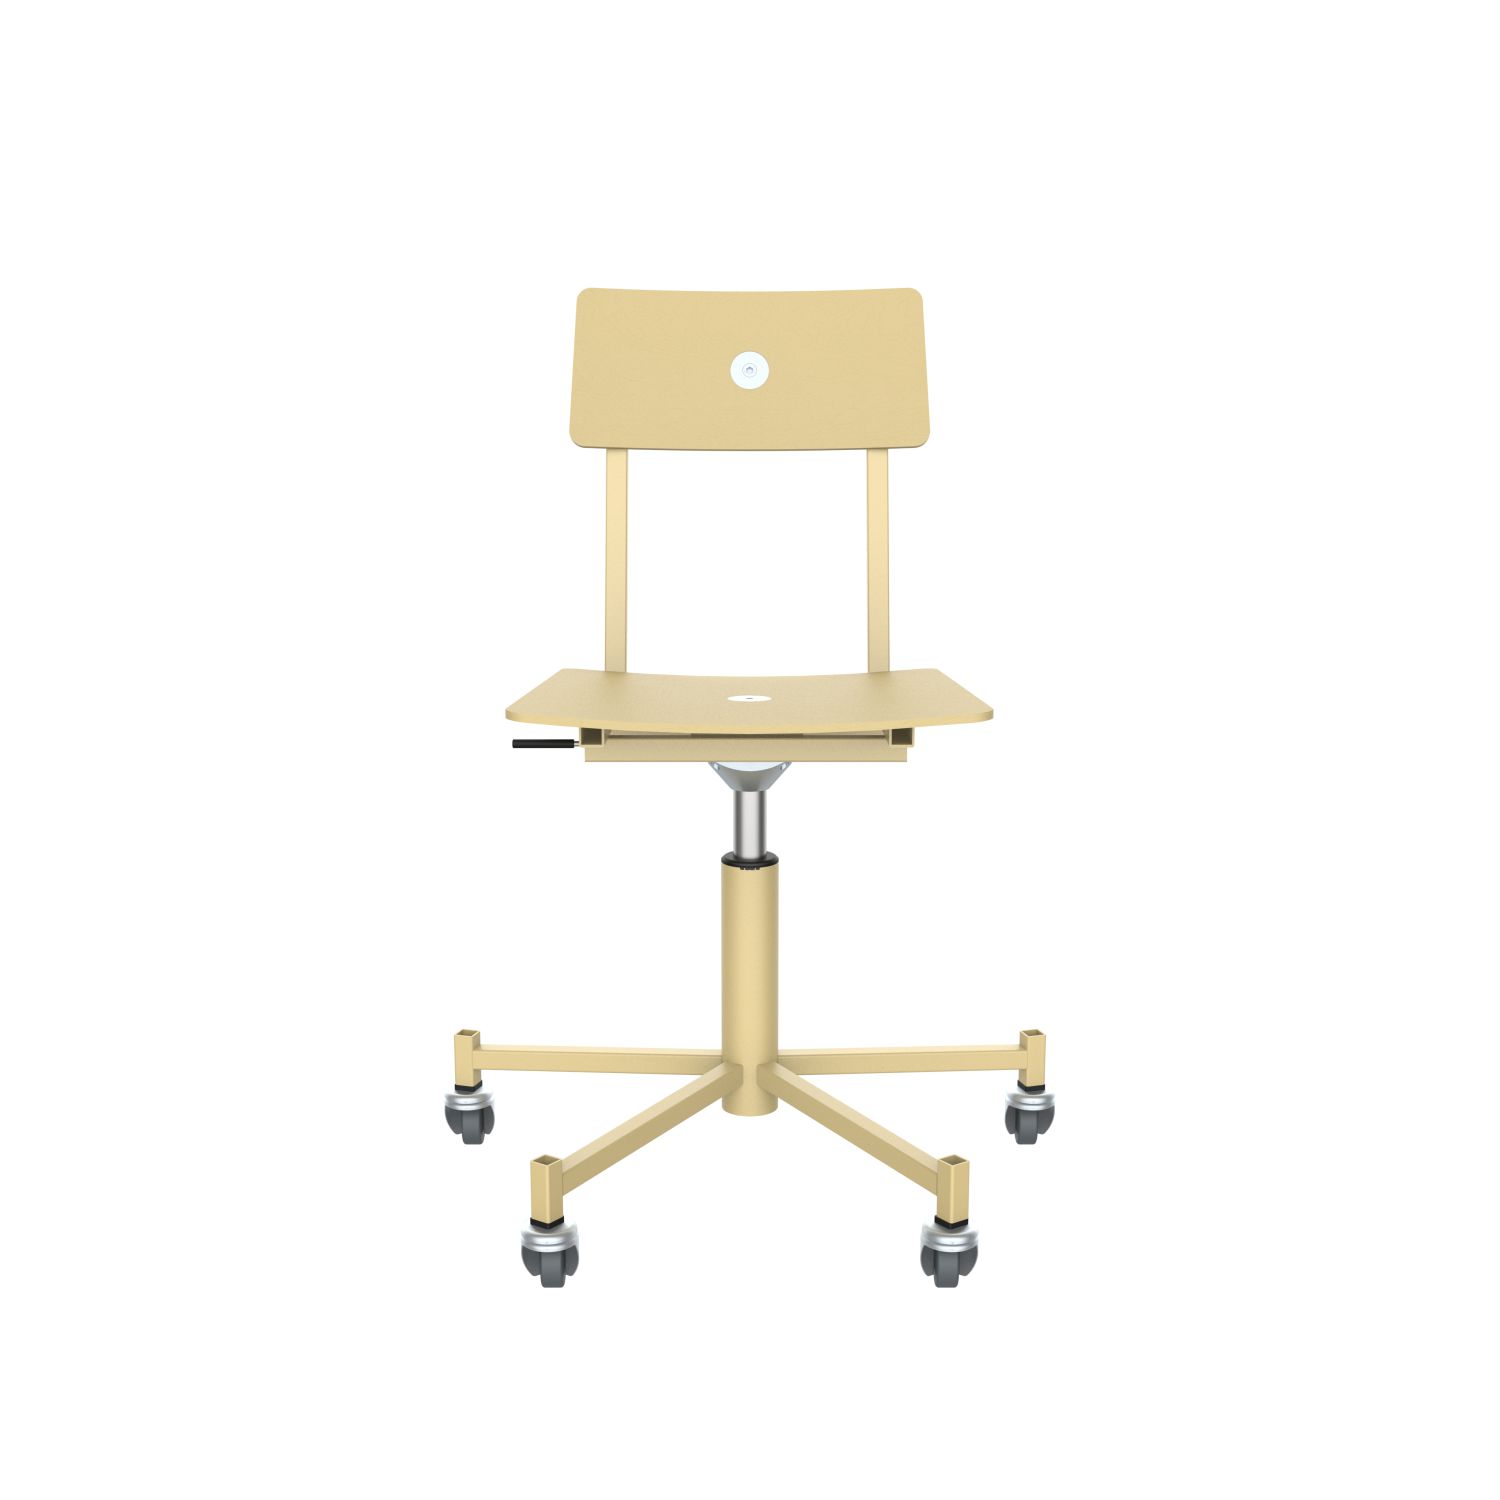 lensvelt piet hein eek mitw wooden office chair without armrests green beige ral1000 green beige ral1000 with wheels